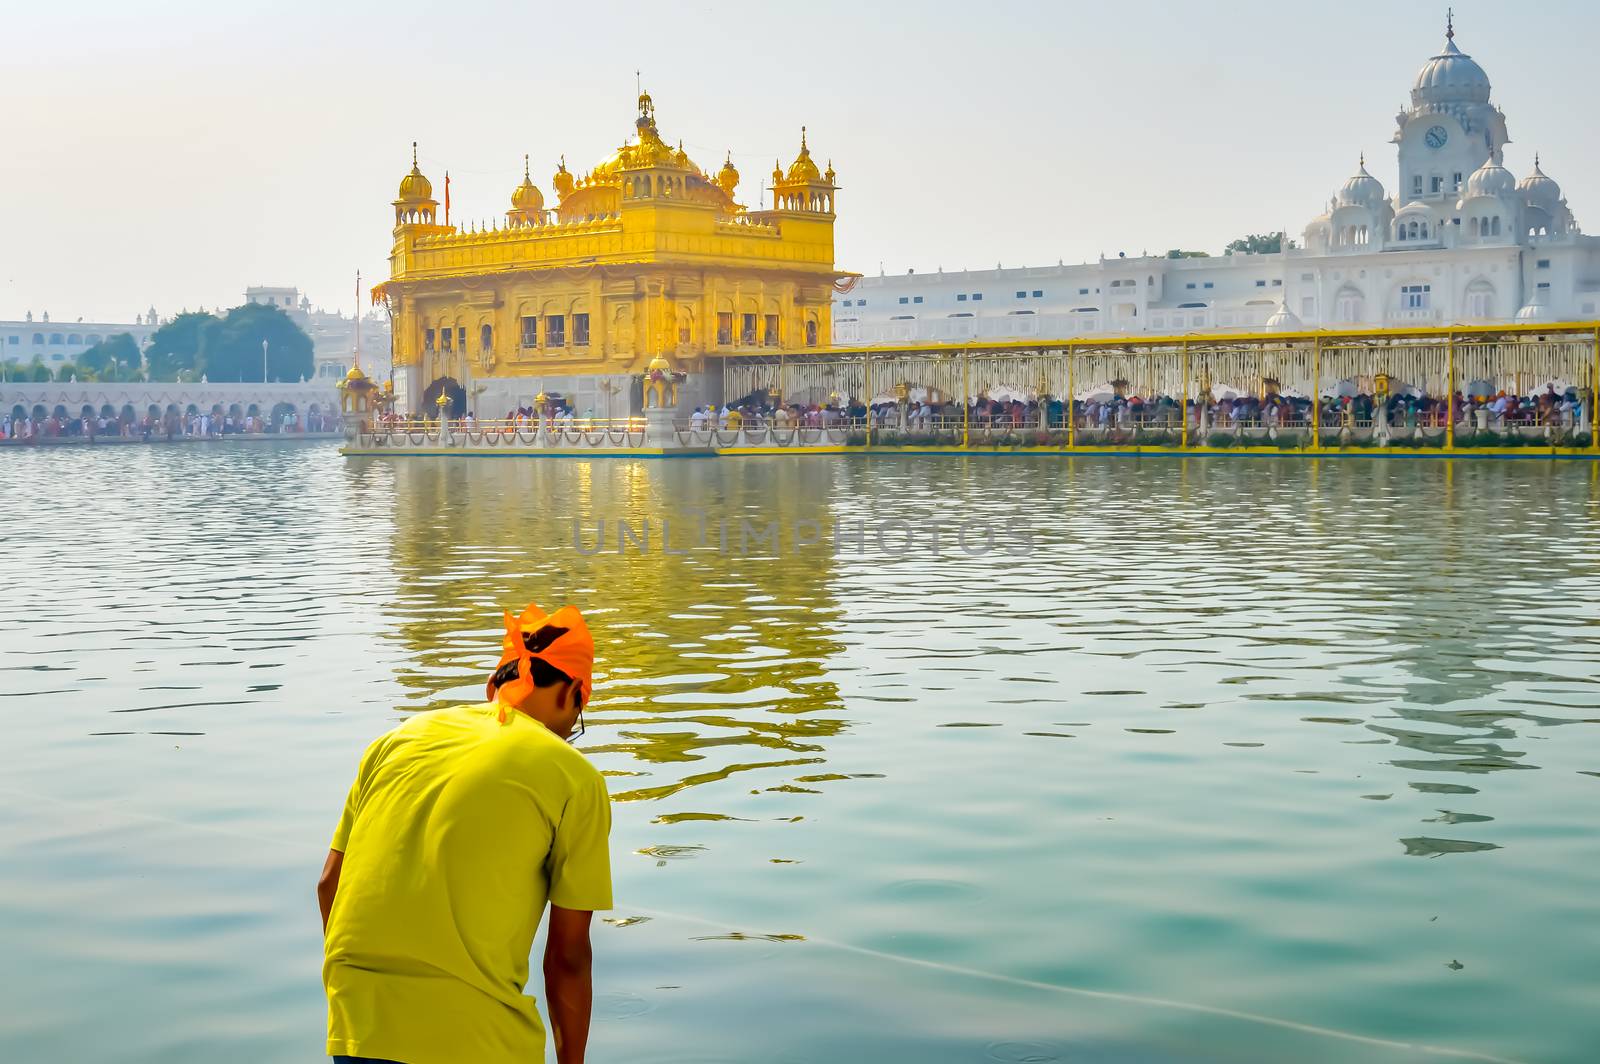 Sikh pilgrim praying in holy tank near Golden Temple (Sri Harmandir Sahib), Amritsar, INDIA by sudiptabhowmick